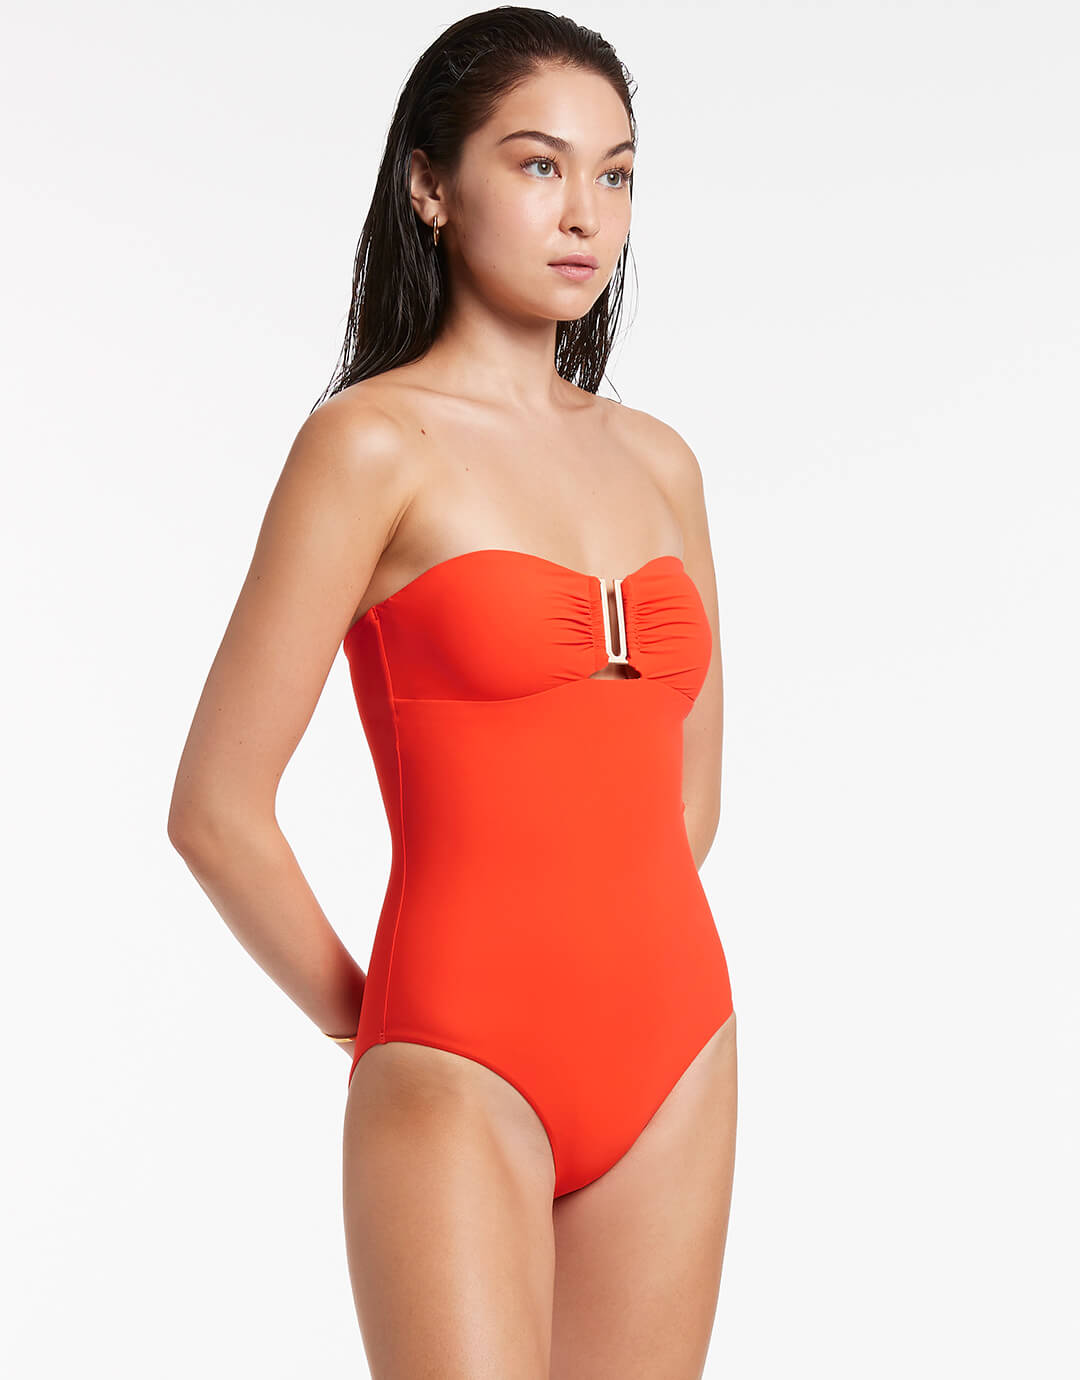 Jetset Bandeau Swimsuit - Fiamma Red - Simply Beach UK